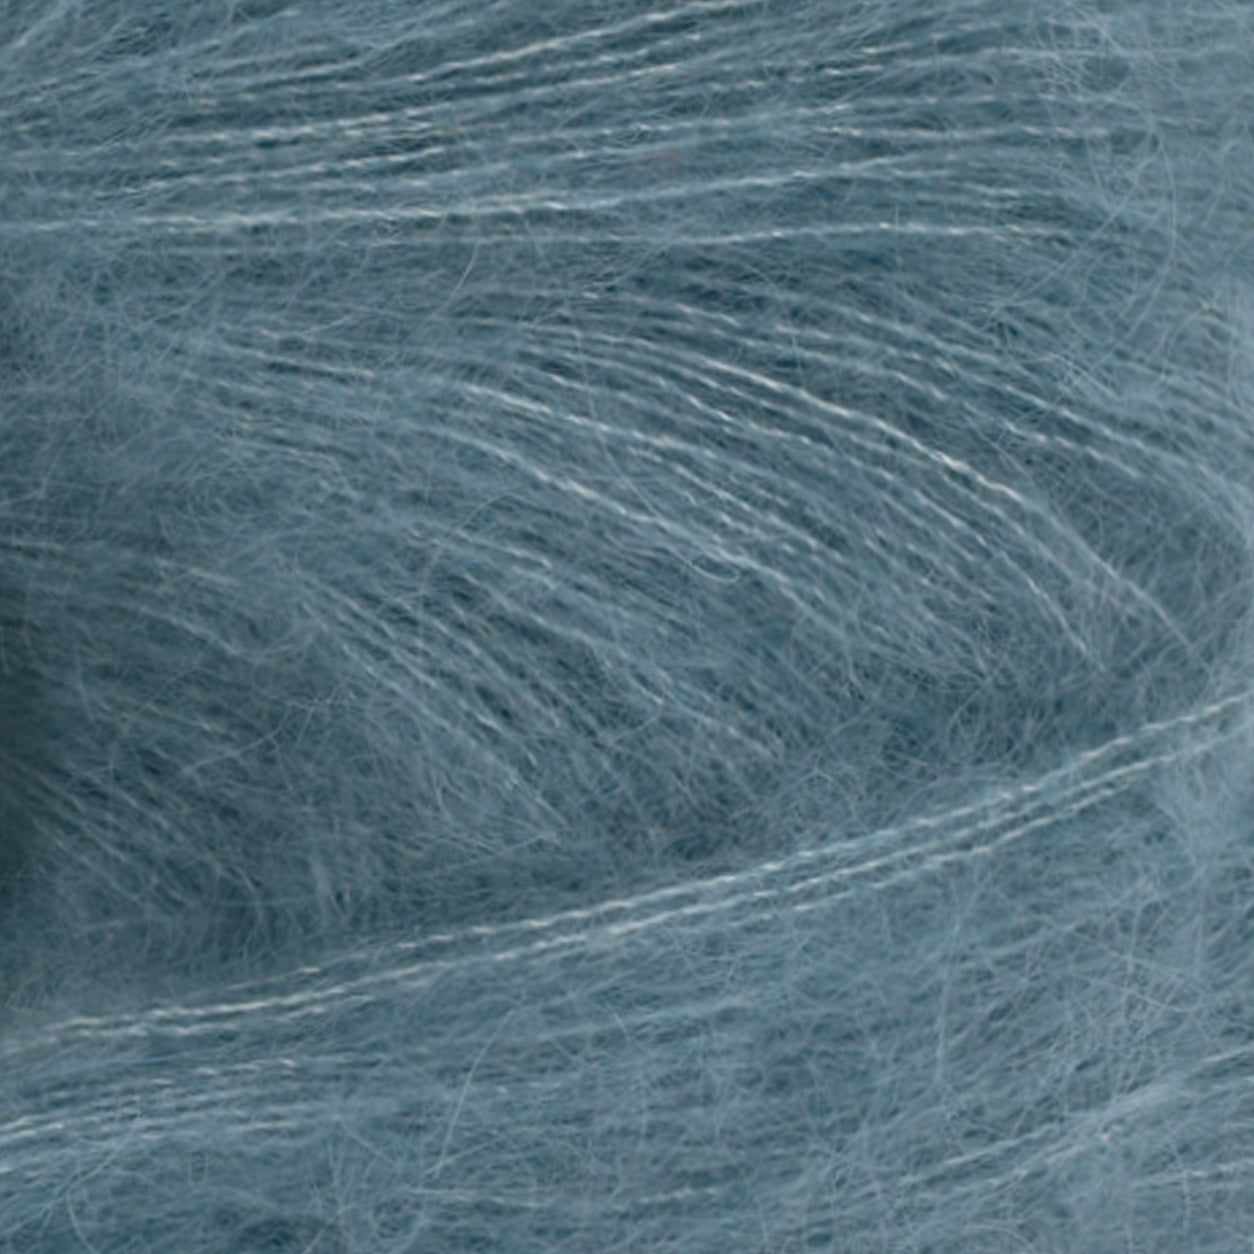 Tynn Silk Mohair isblå [6552]